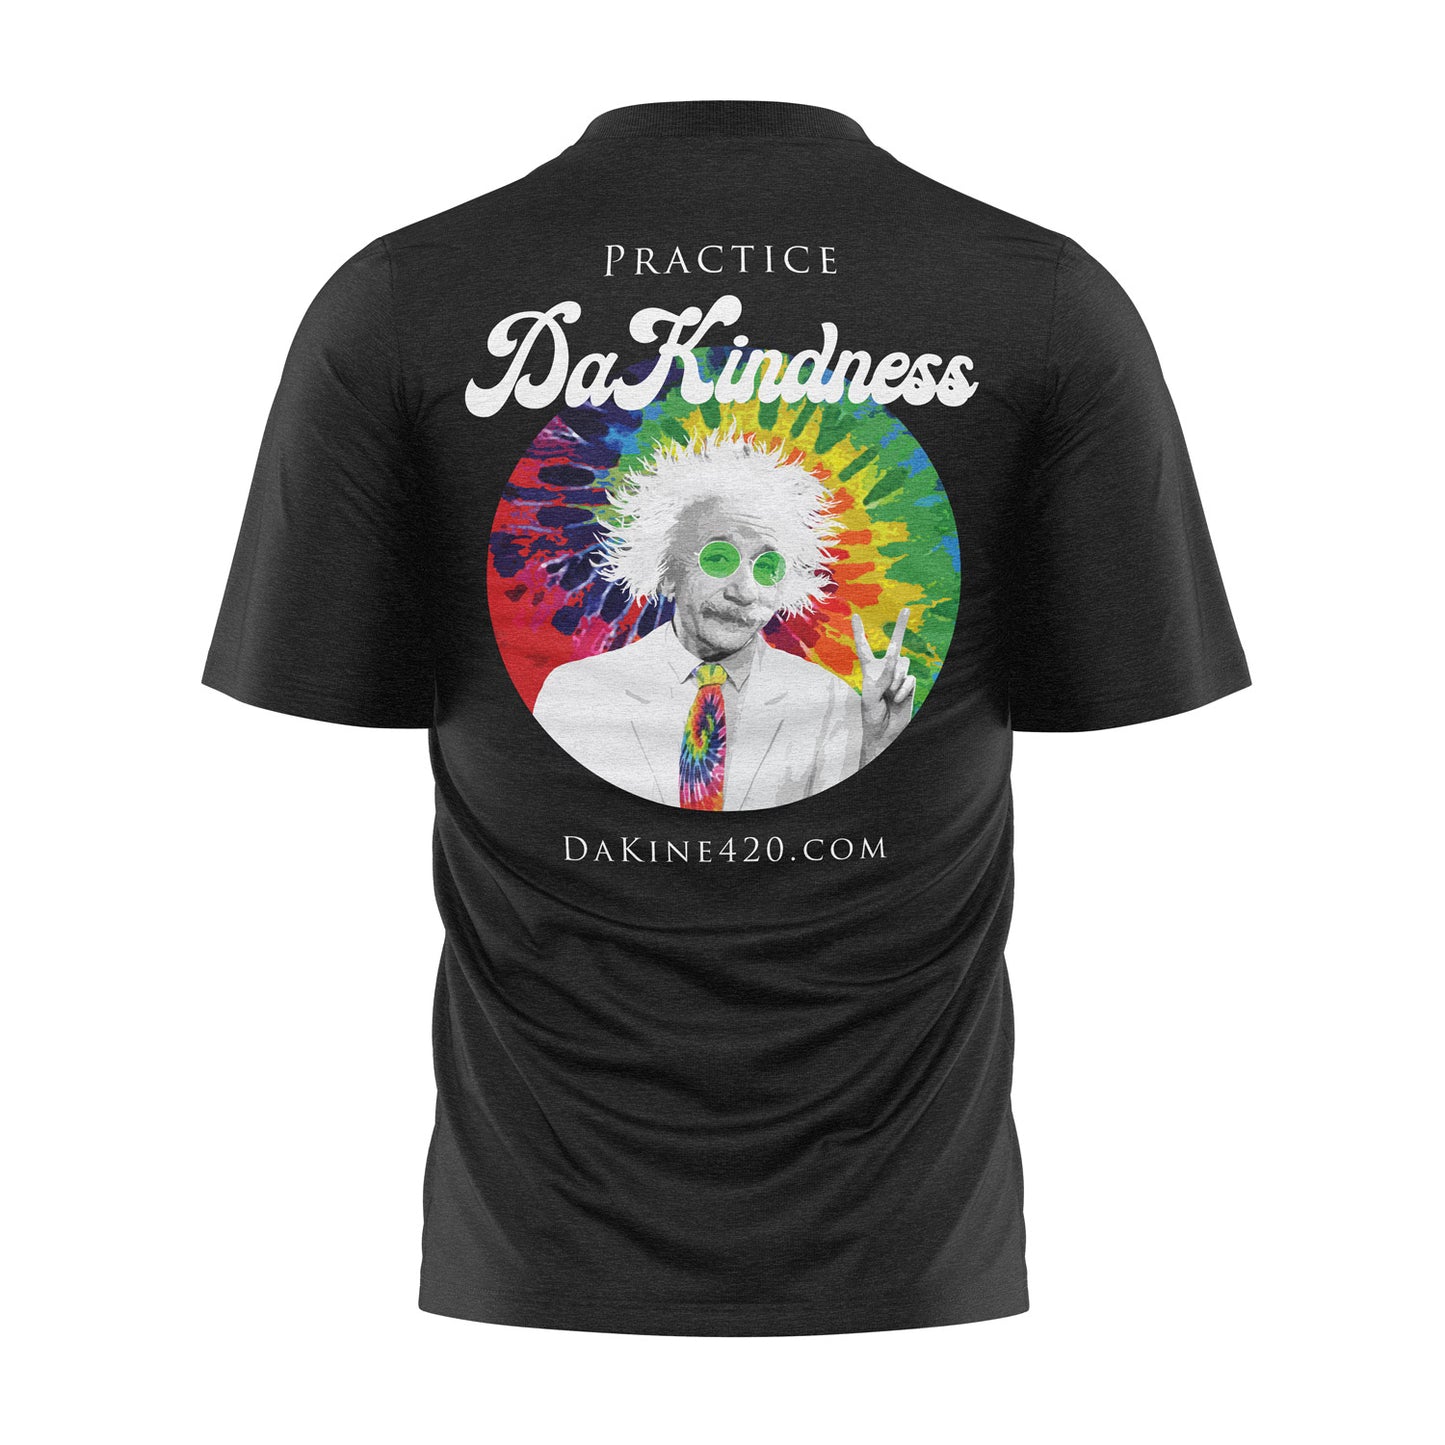 Practice Dakindness T-Shirt